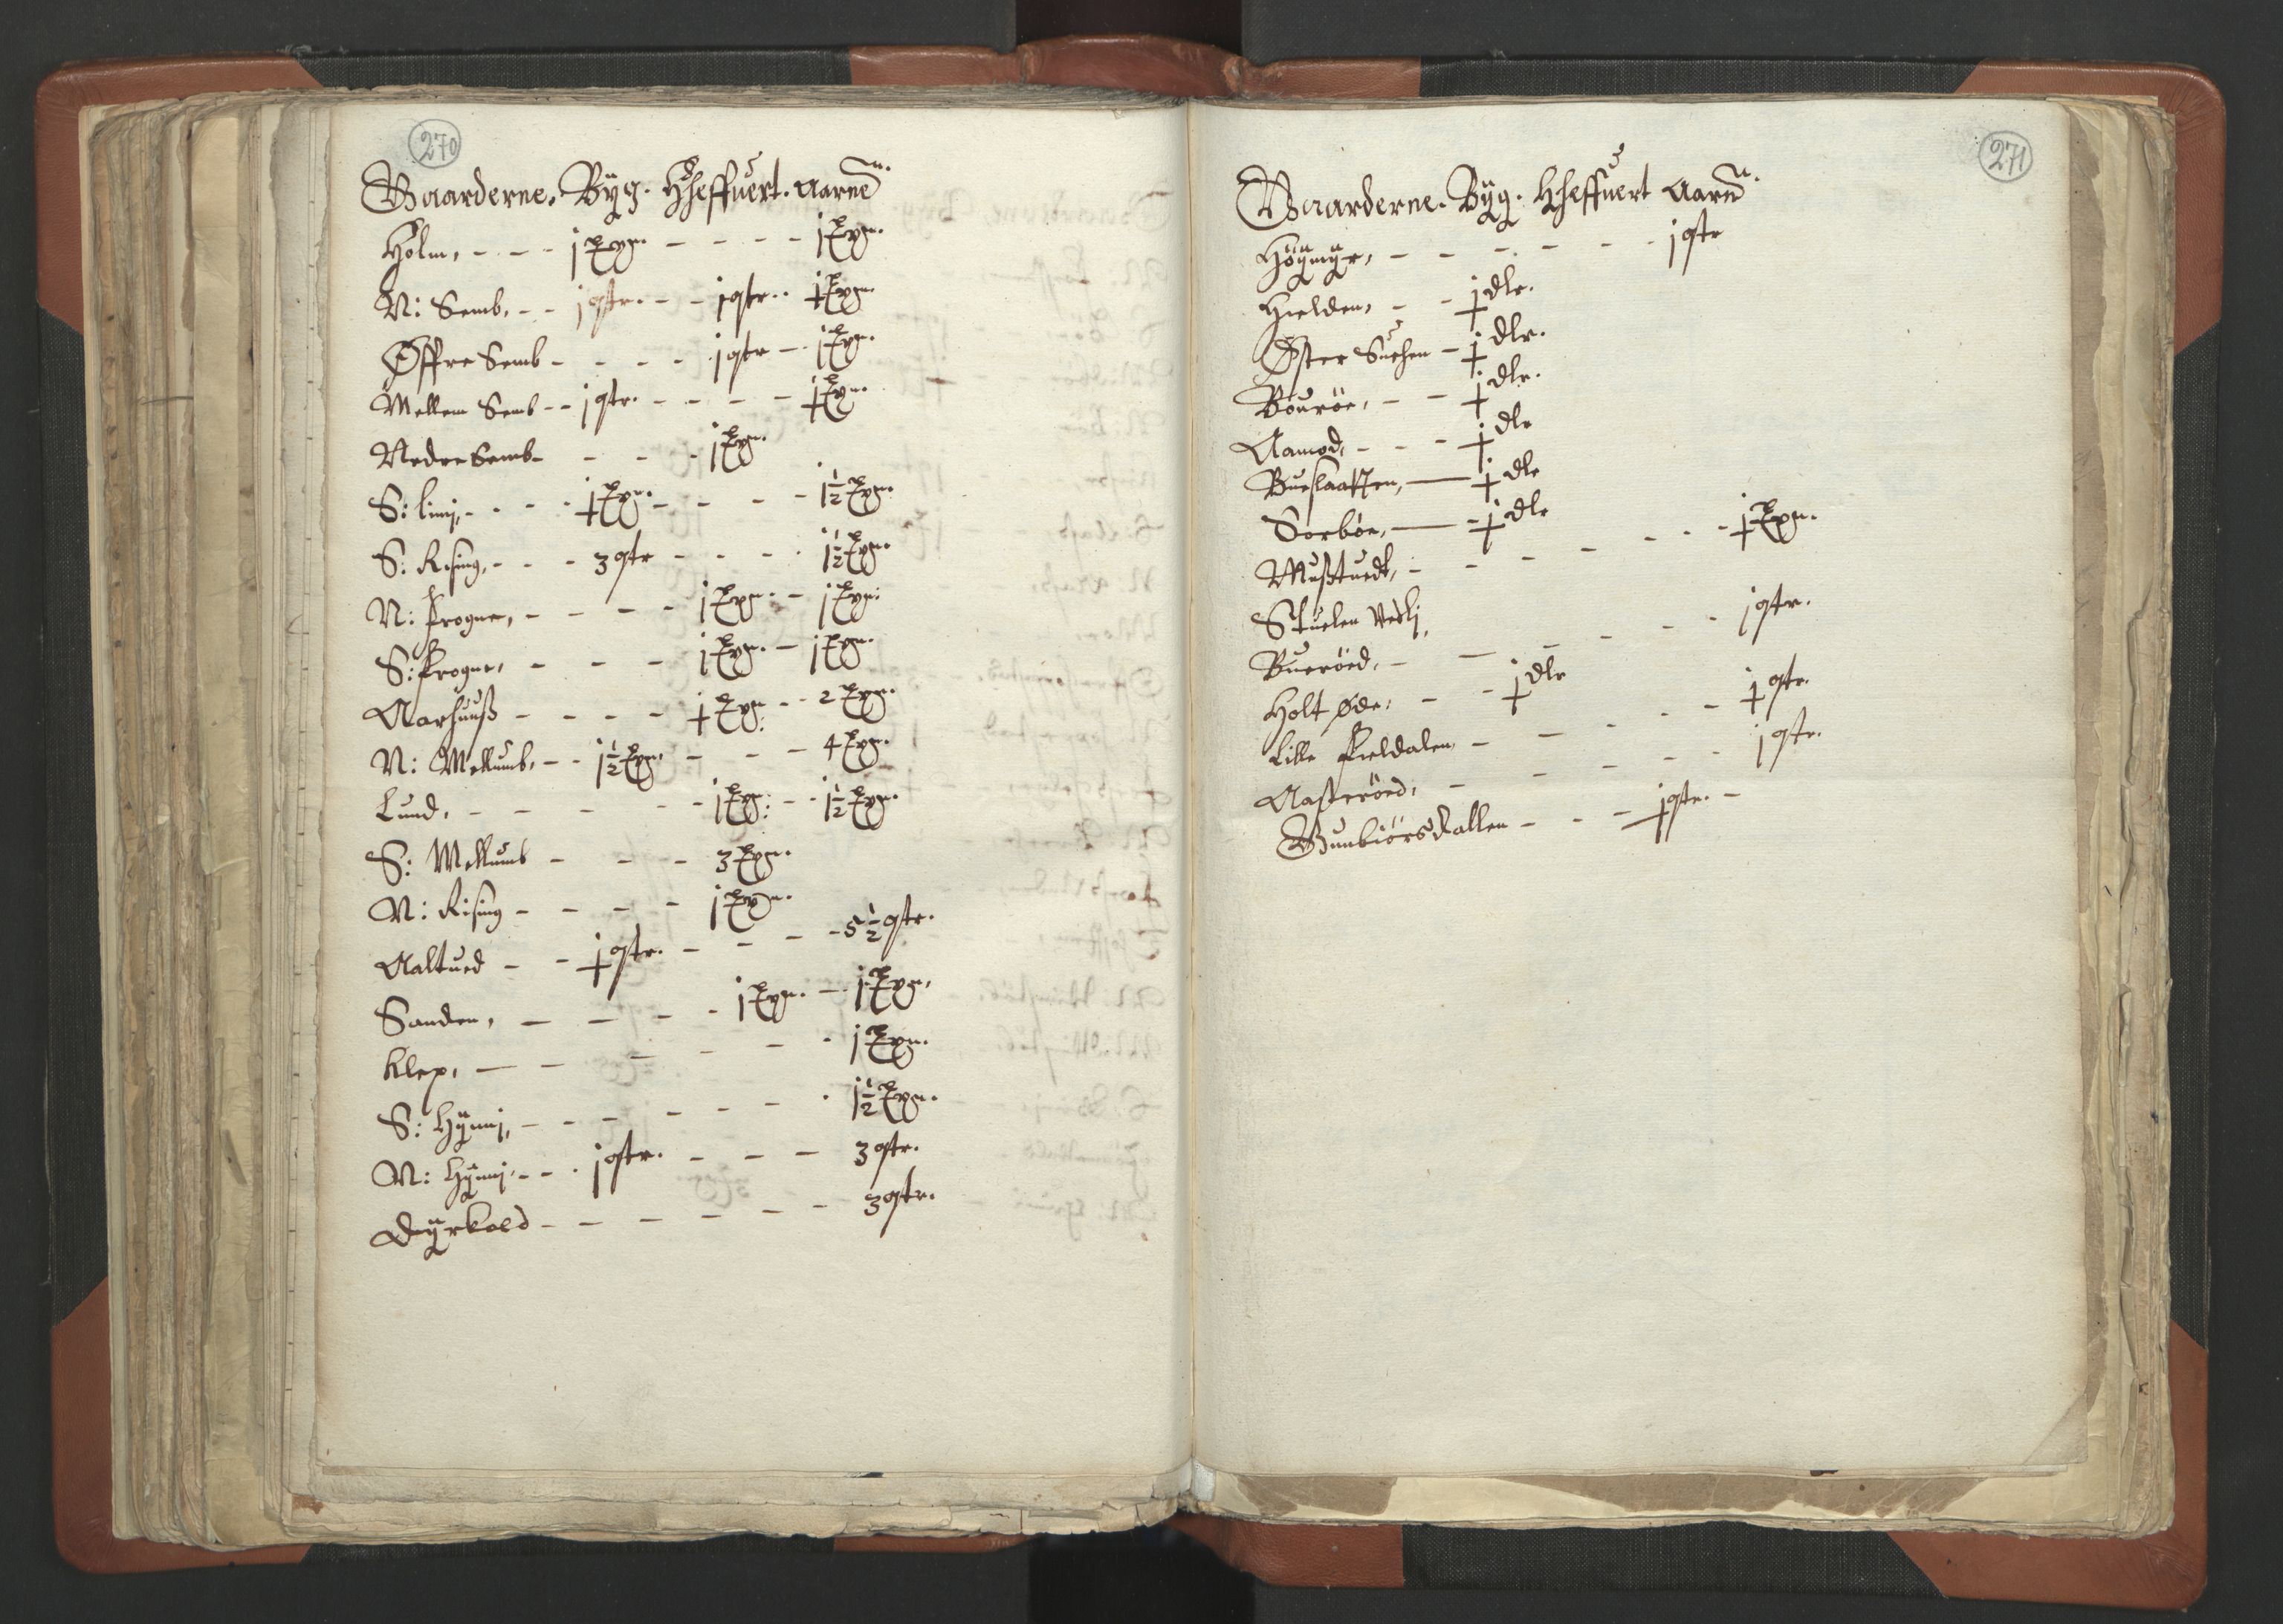 RA, Vicar's Census 1664-1666, no. 12: Øvre Telemark deanery, Nedre Telemark deanery and Bamble deanery, 1664-1666, p. 270-271